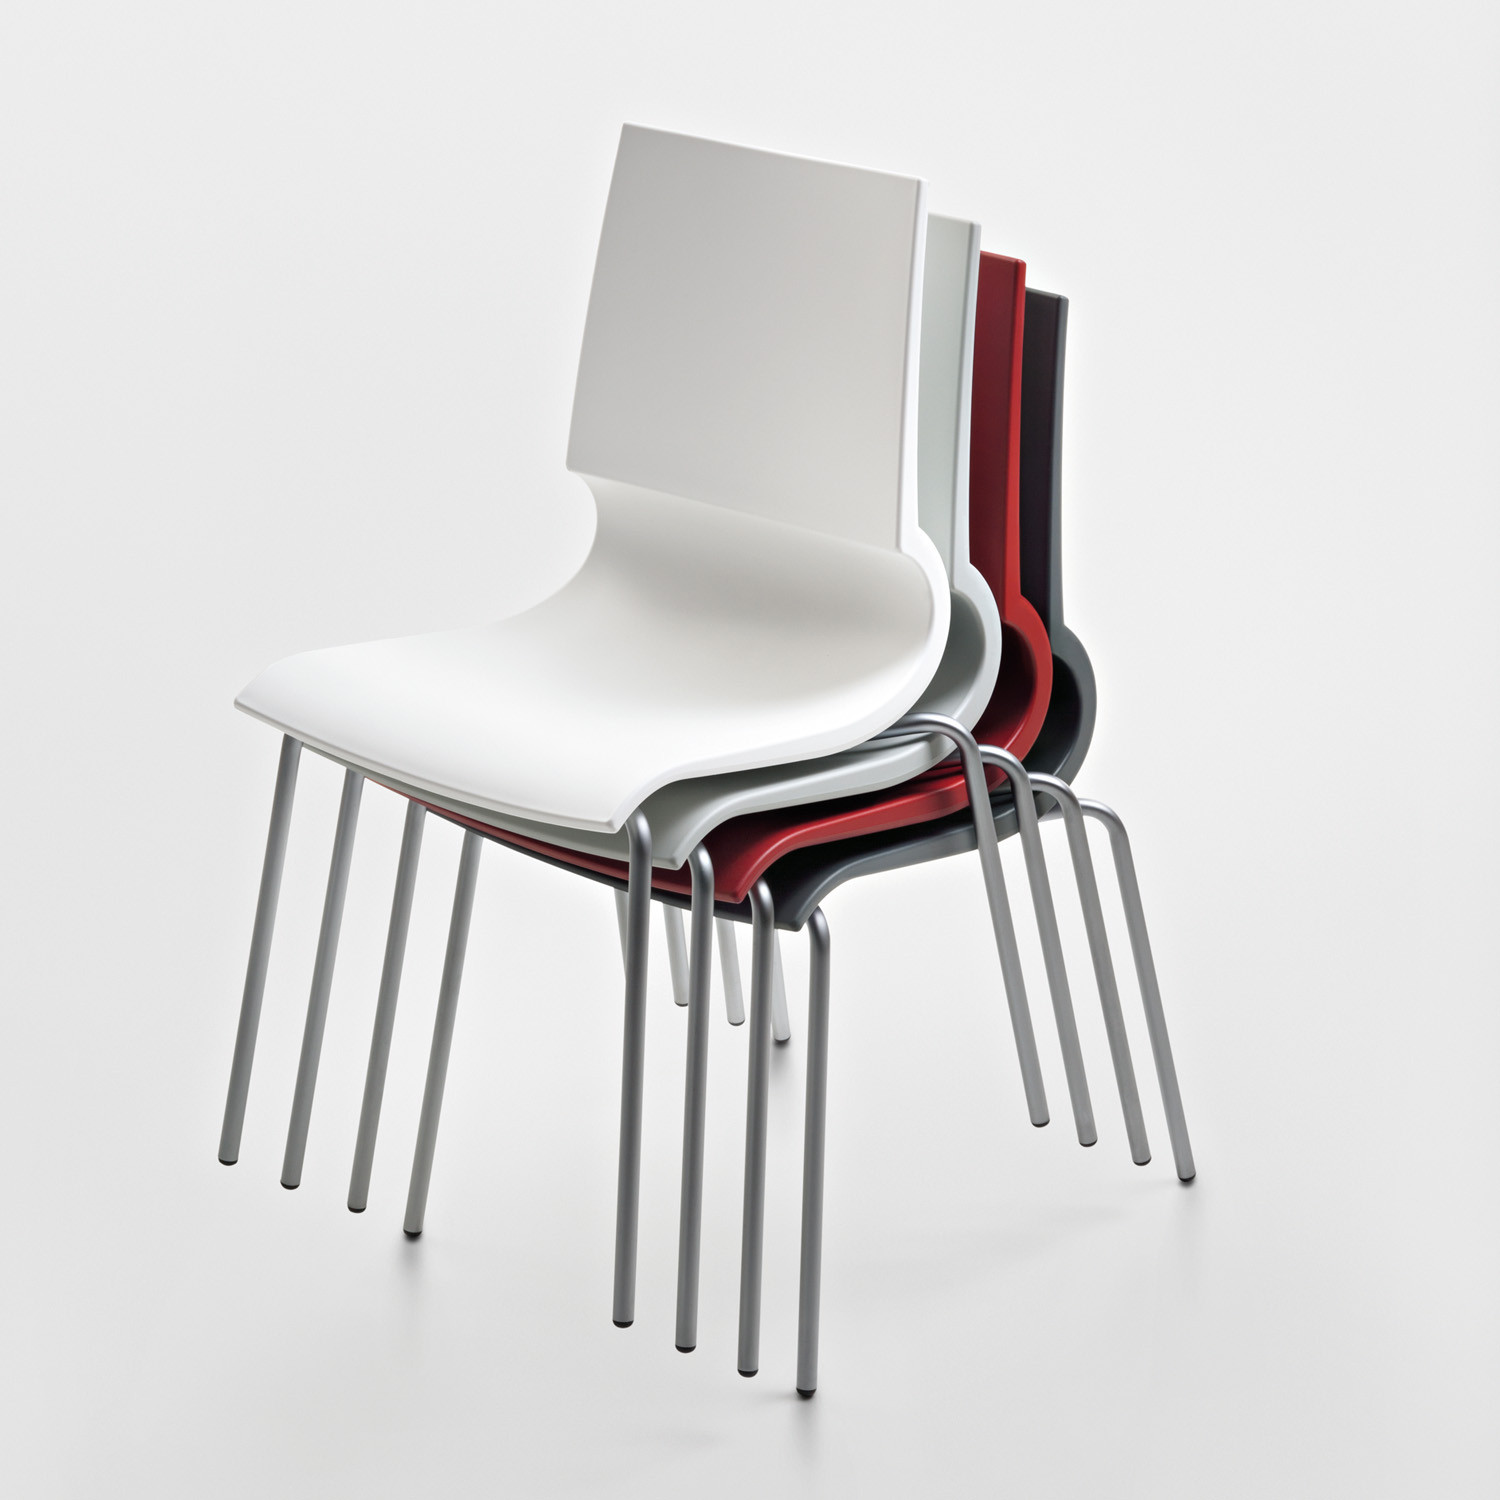 Ricciolina Side Chairs